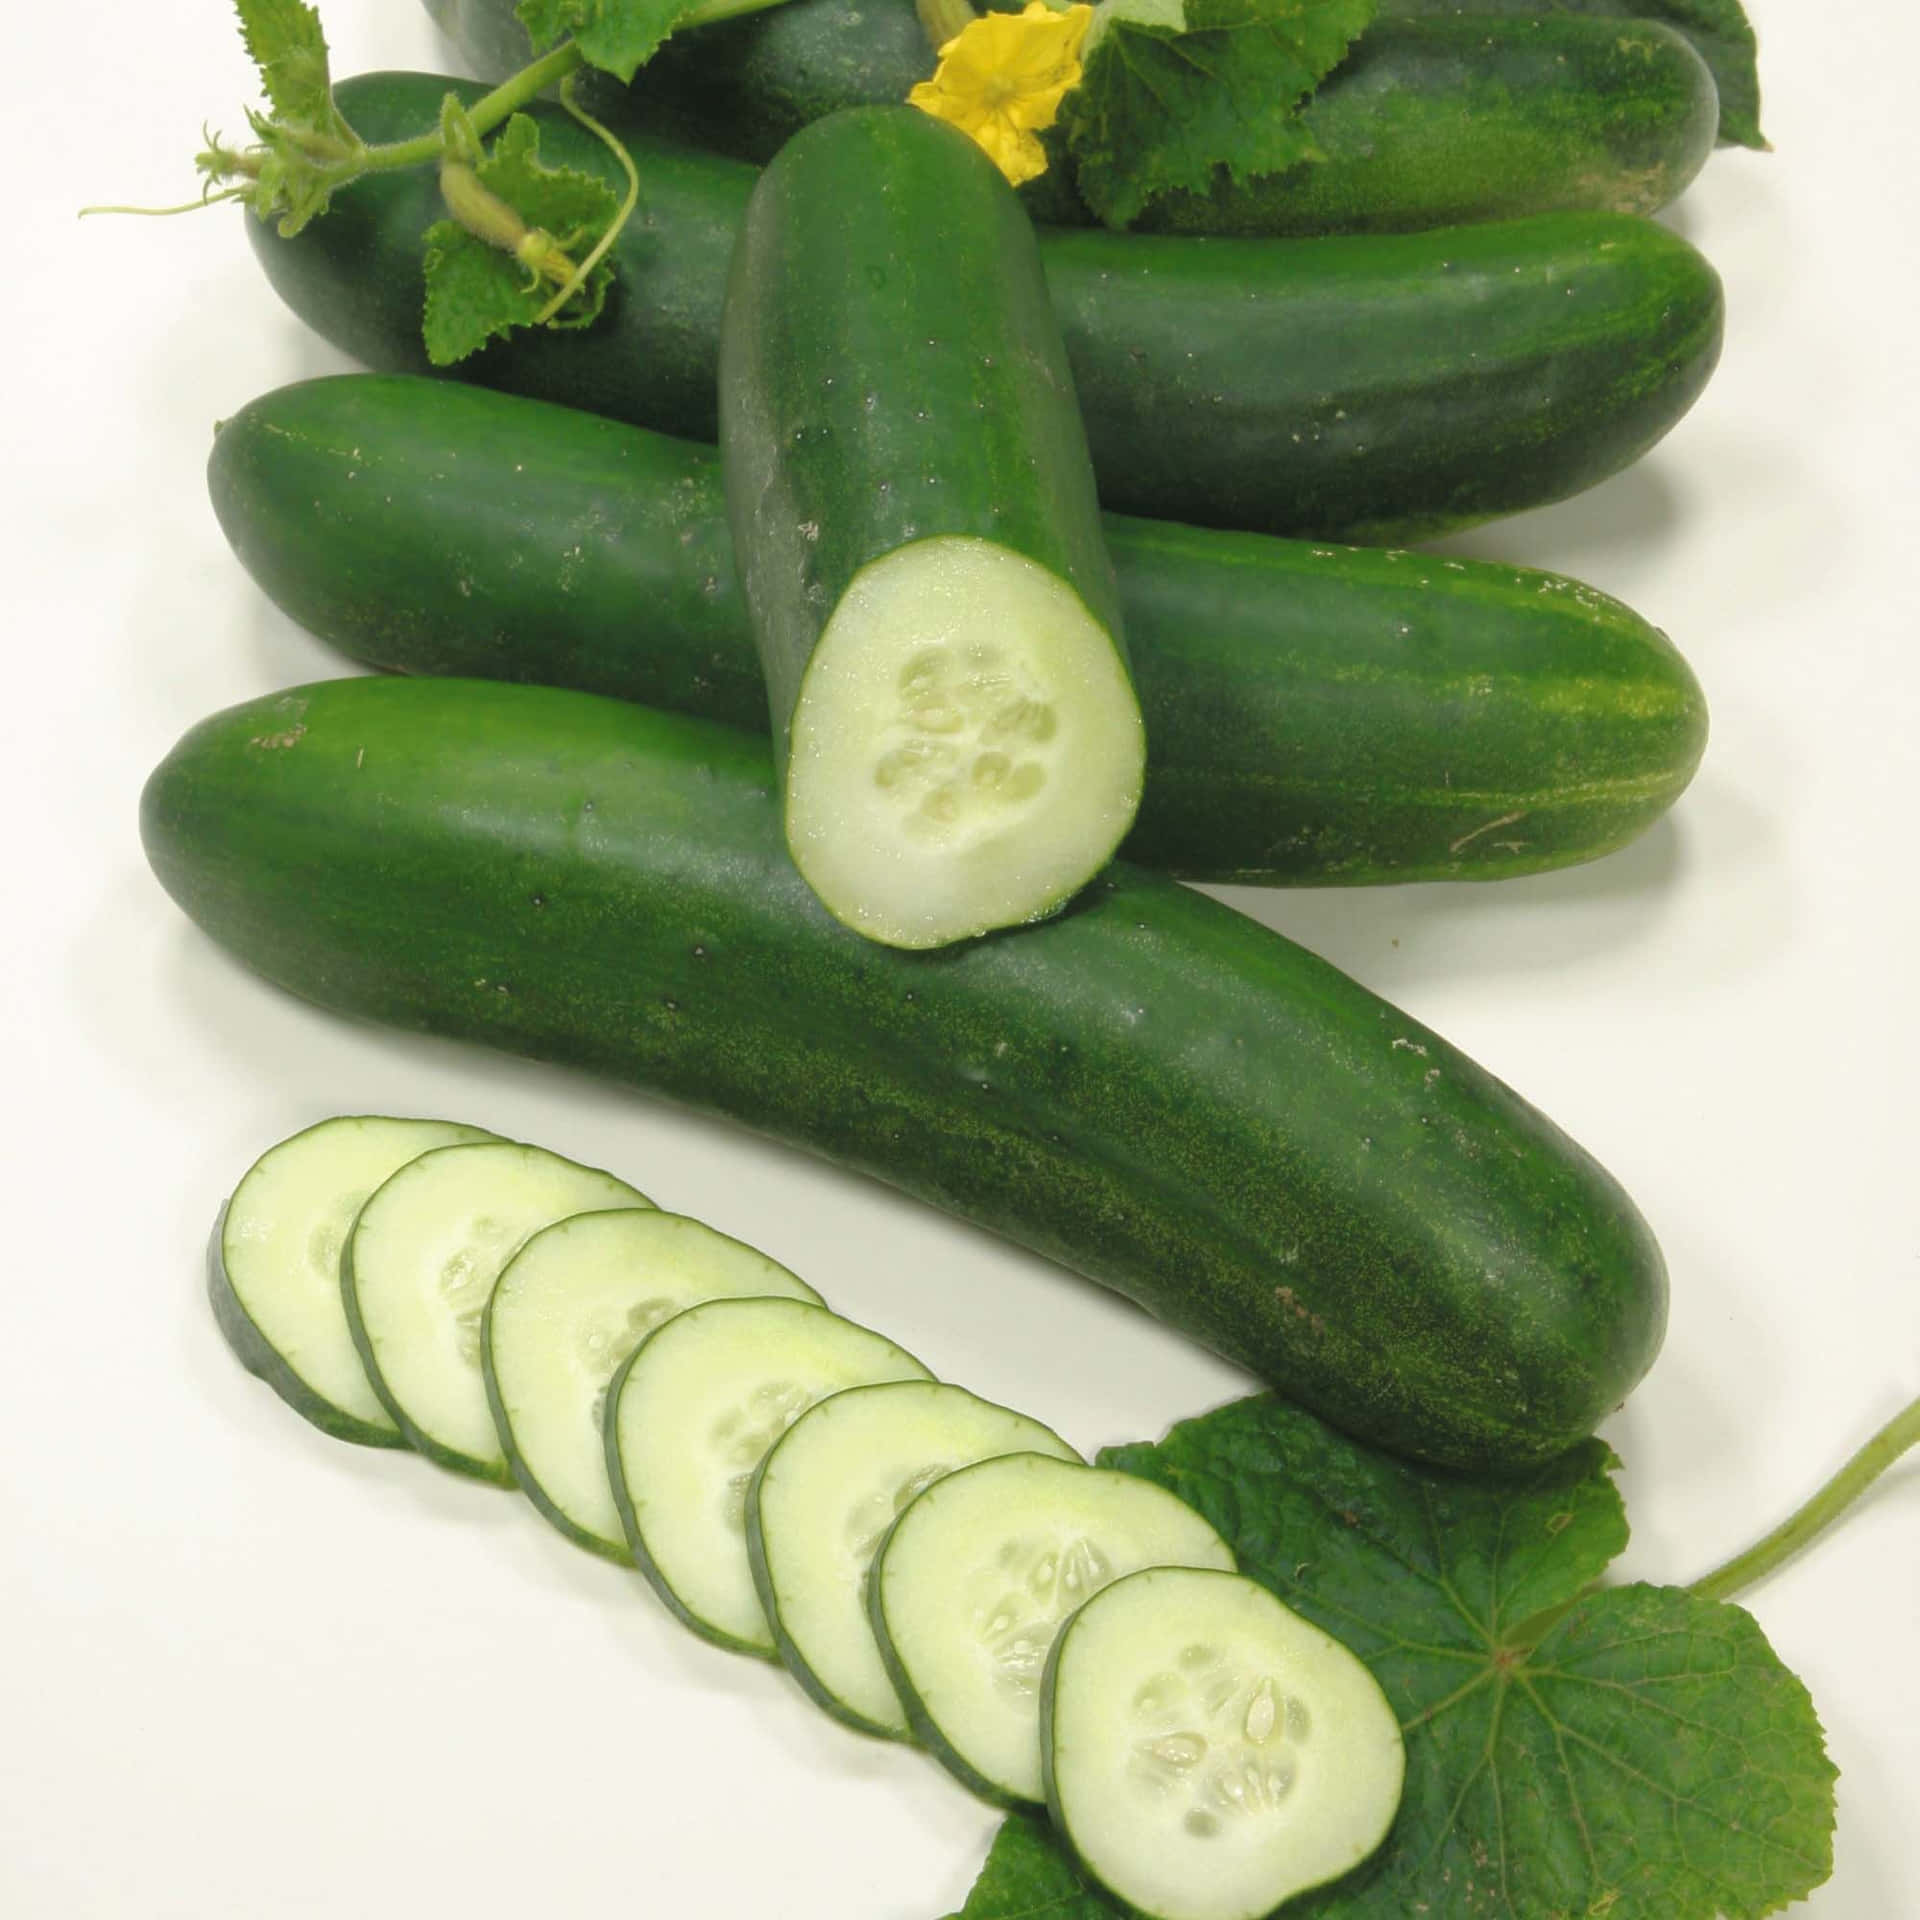 "Vibrant Green Cucumbers"